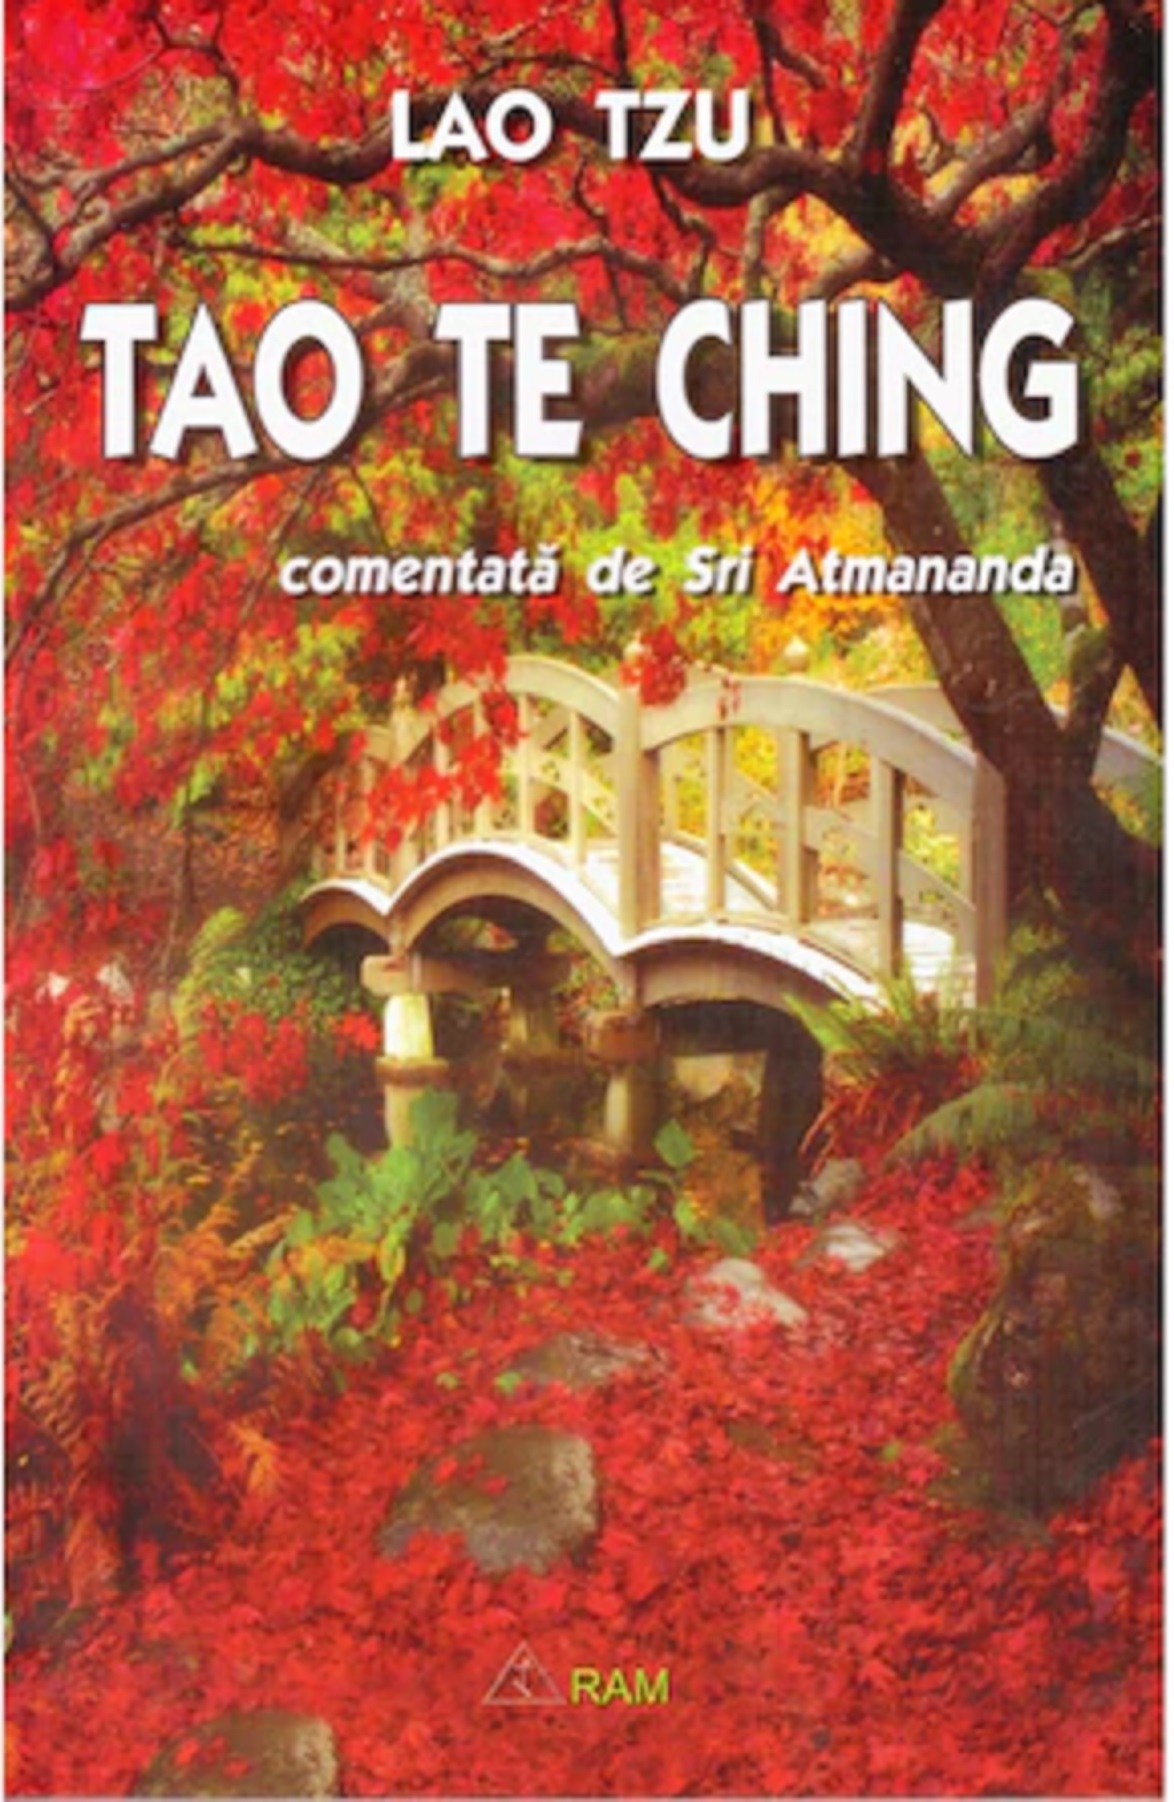 Tao Te Ching | Lao Tzu